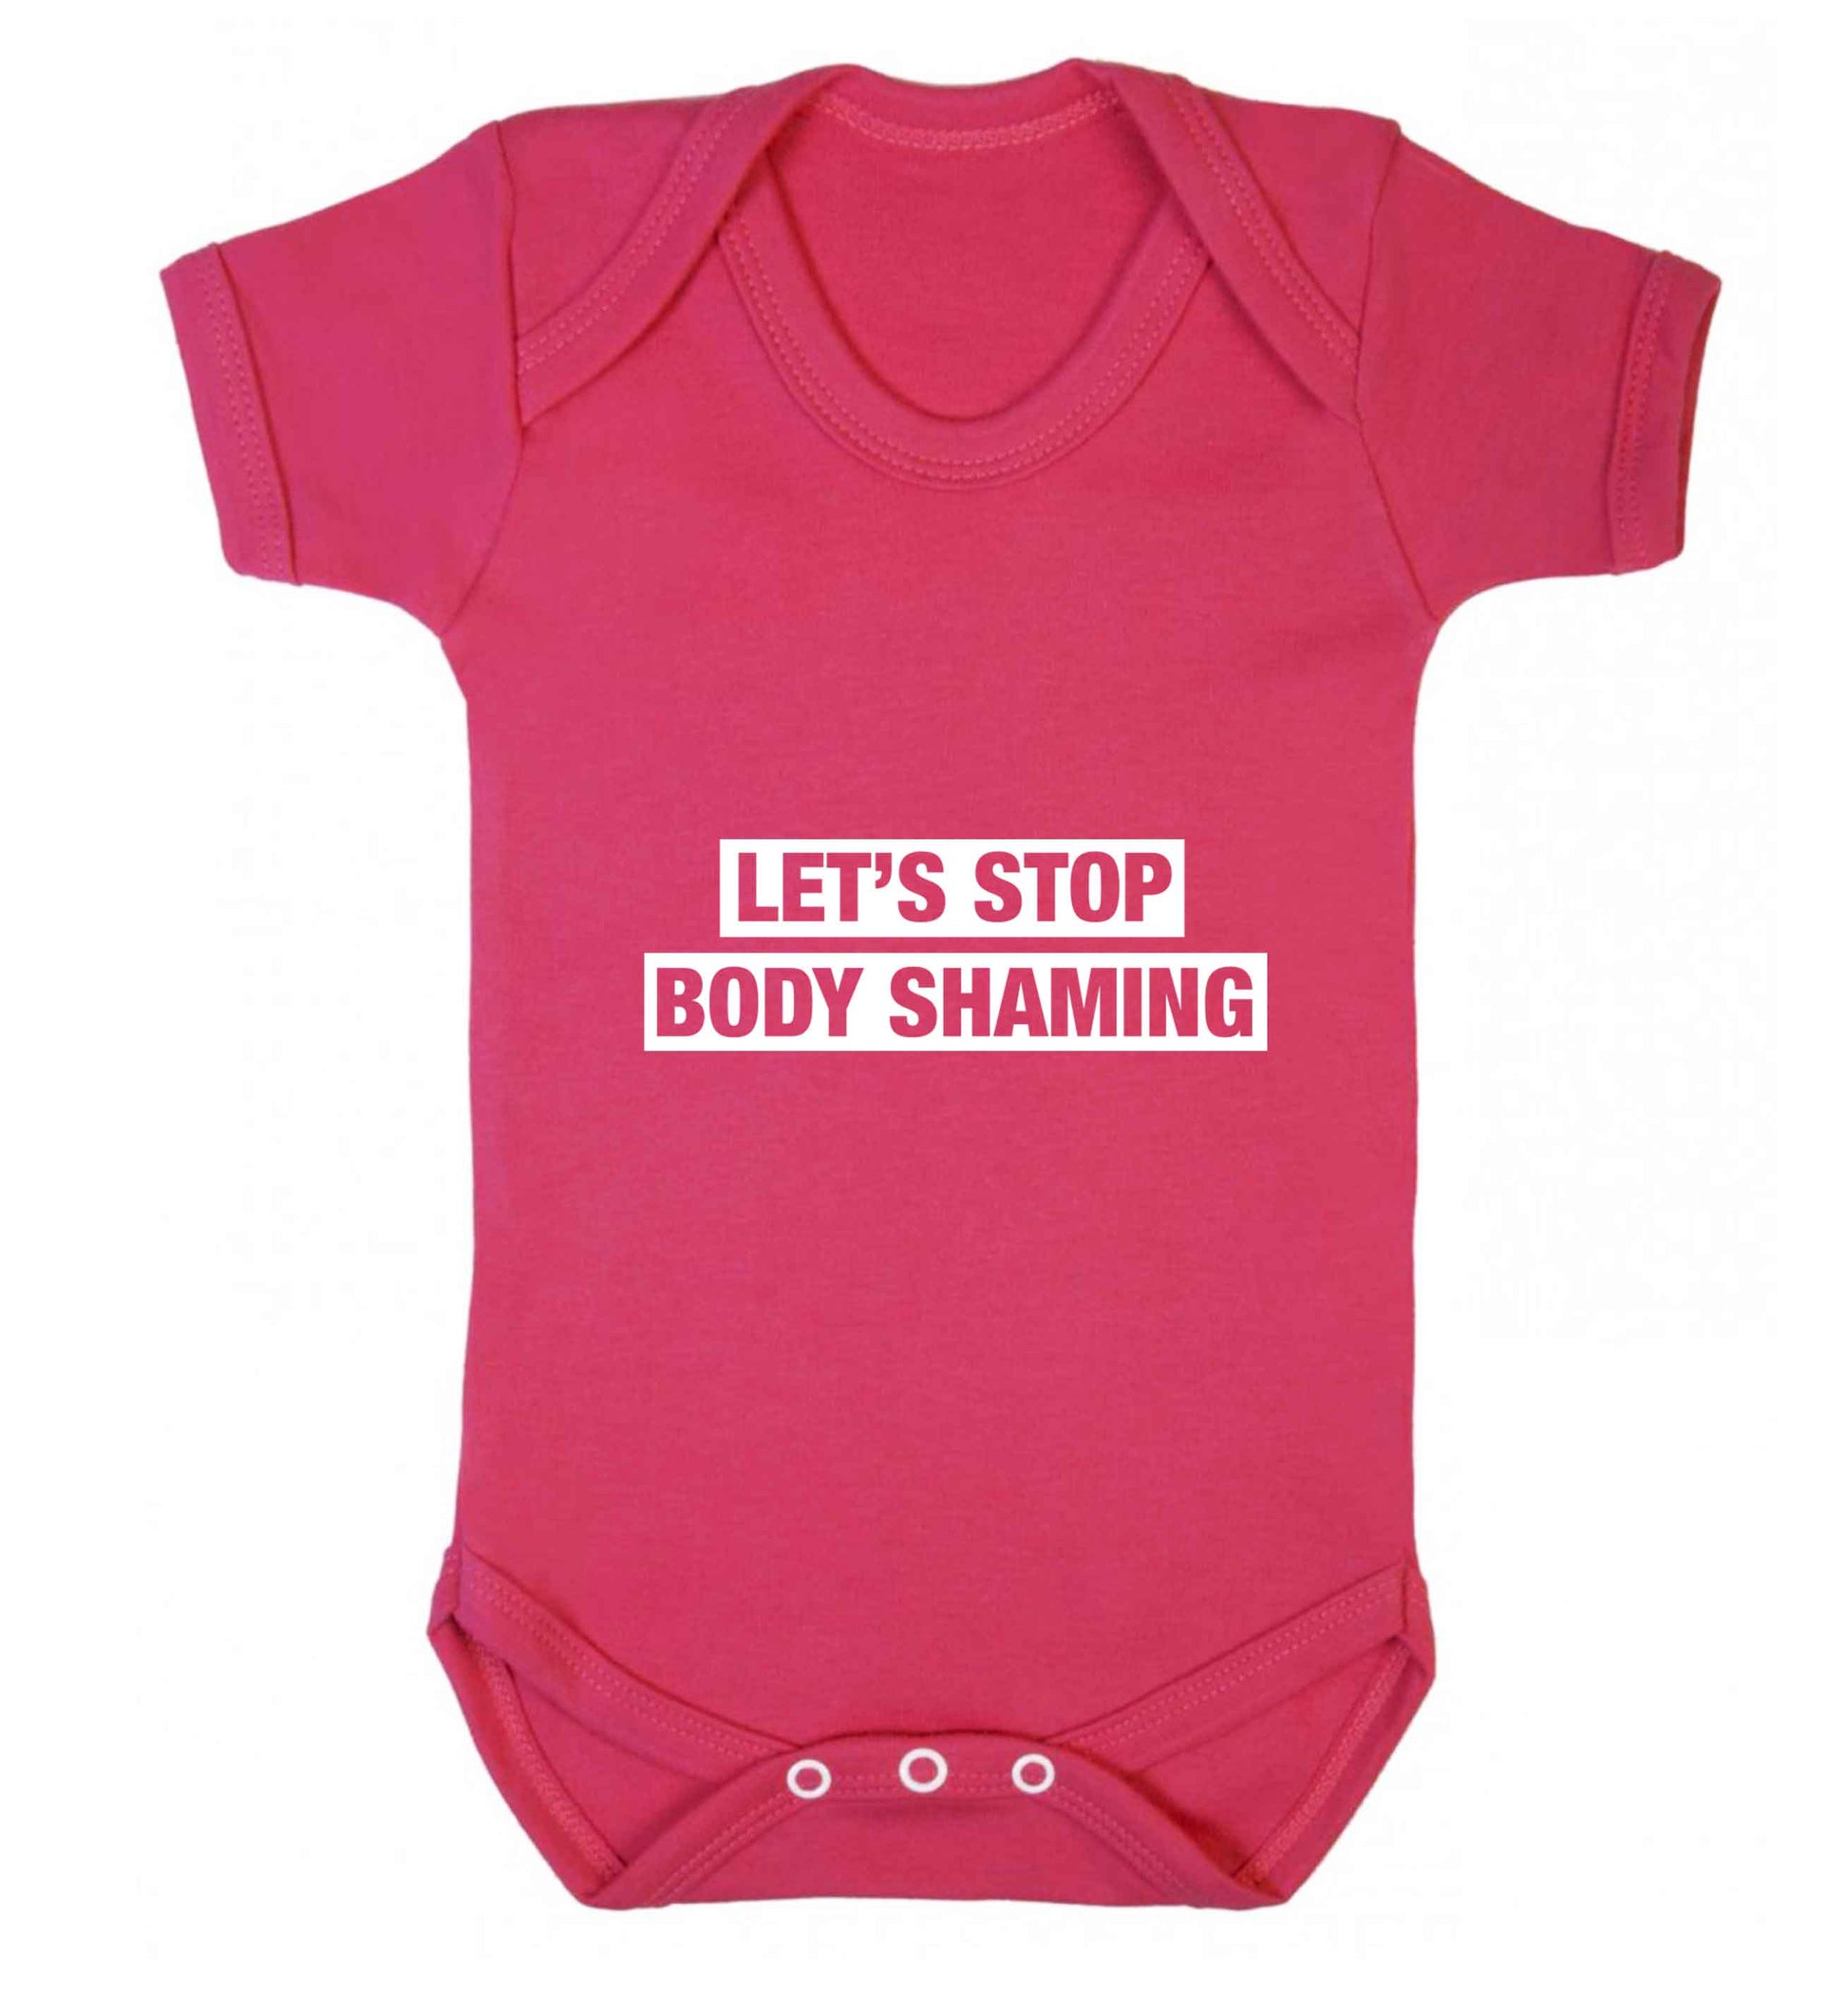 Let's stop body shaming baby vest dark pink 18-24 months